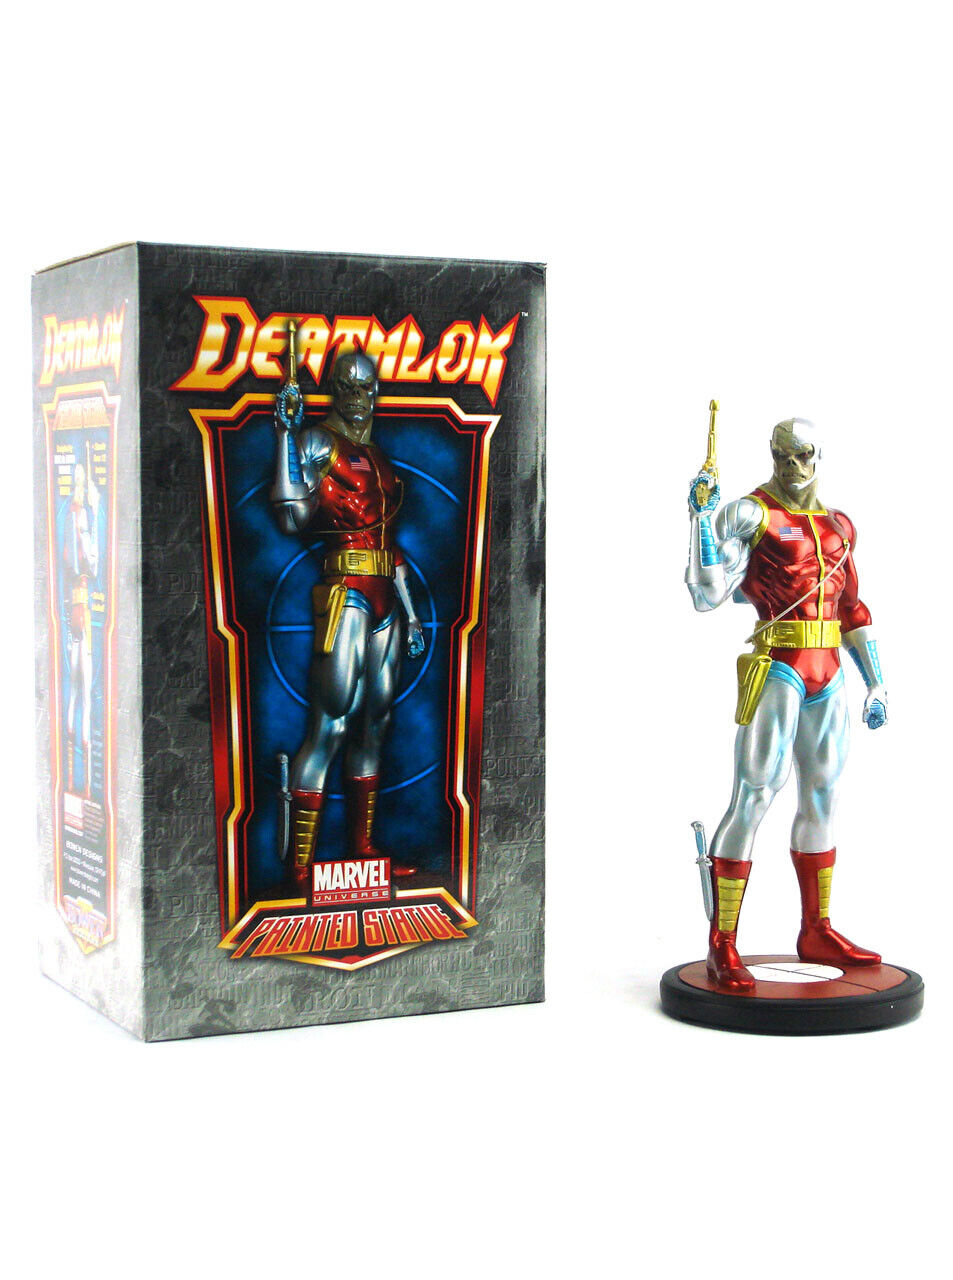 Bowen Designs Deathlok Statue 327/1000 Marvel Sample New In Box